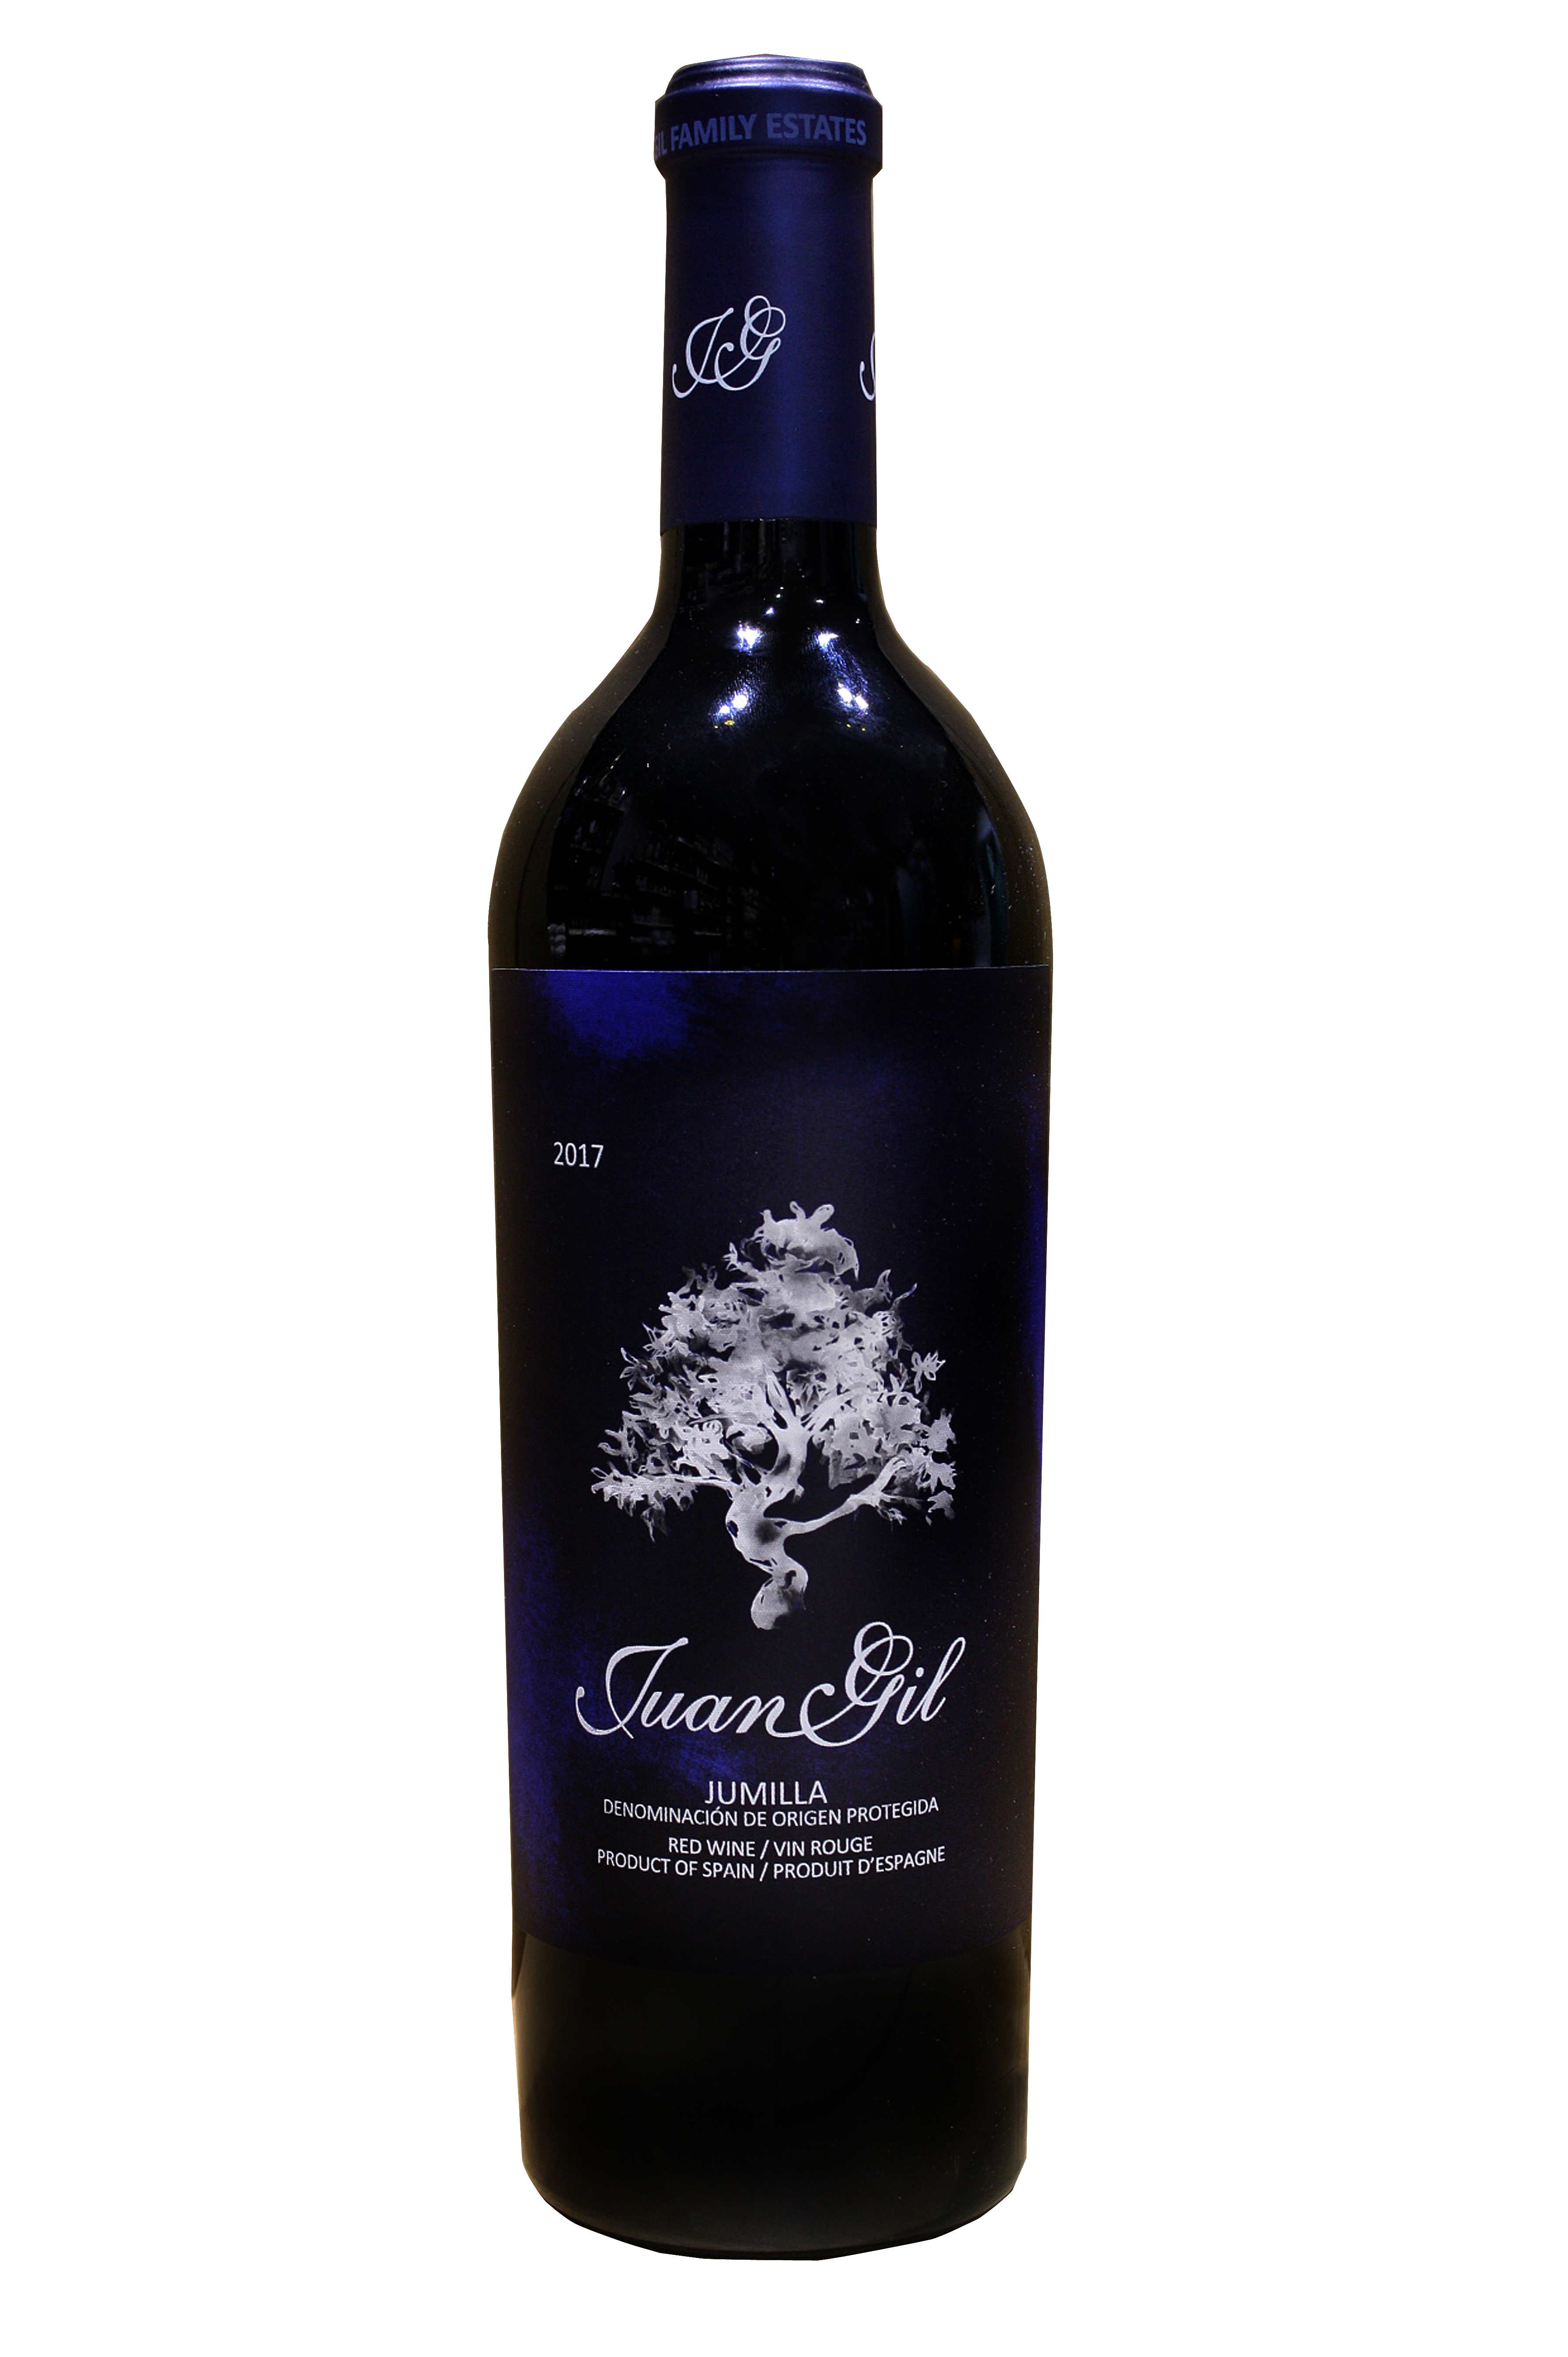 Juan gil azul red wine